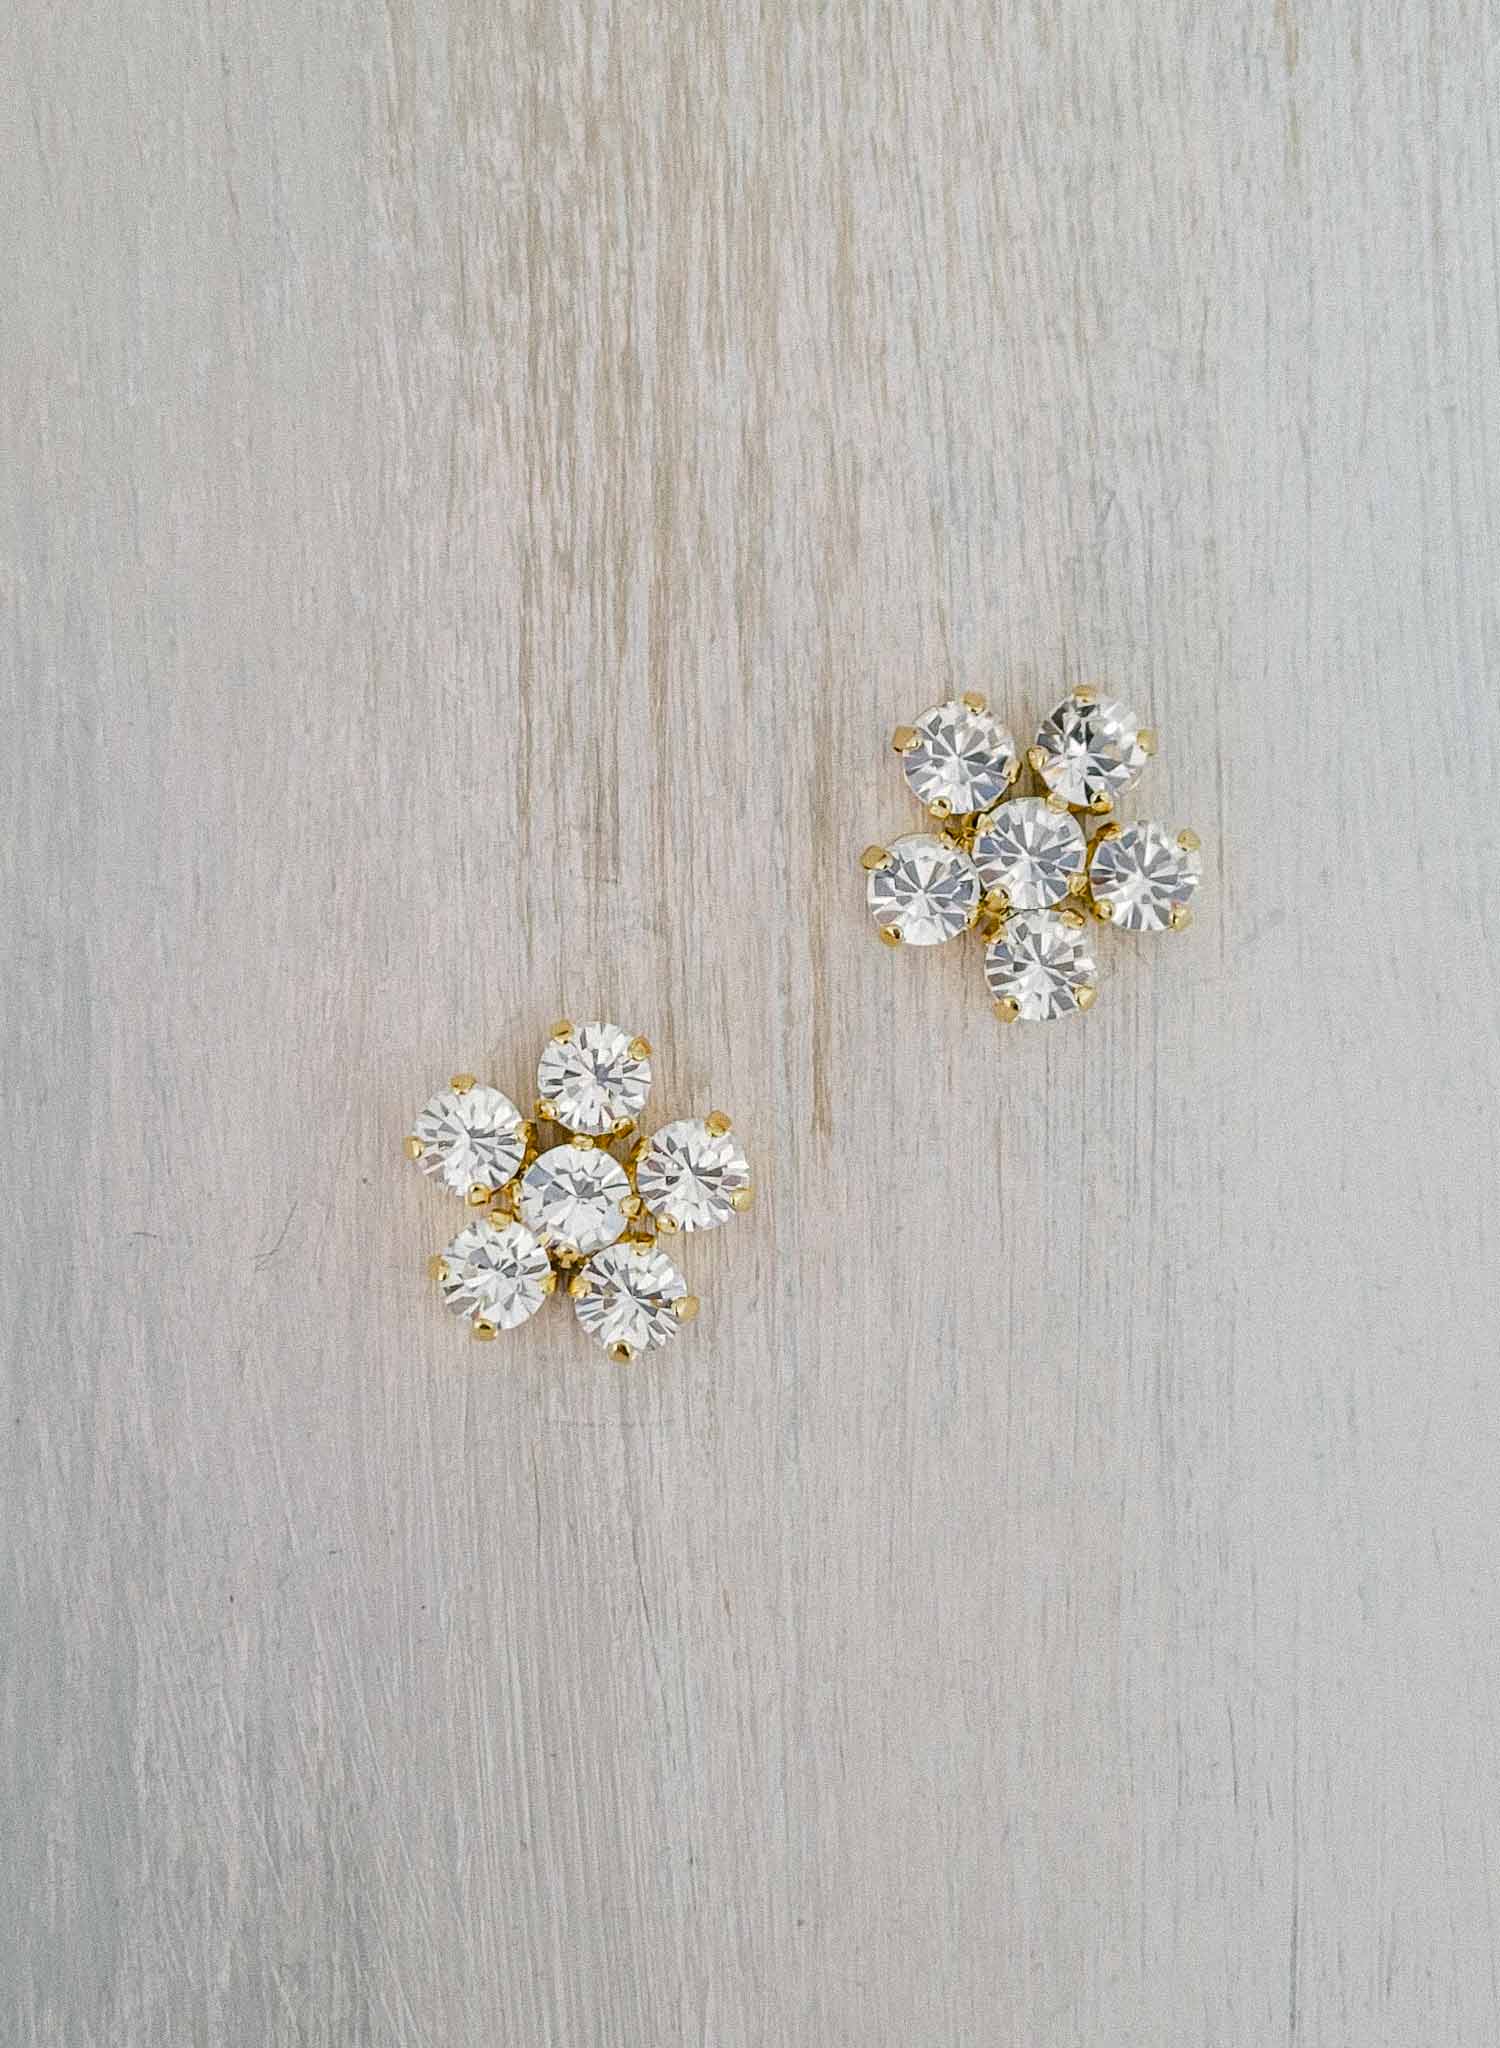 Crystal blossom stud earrings - Style #2385